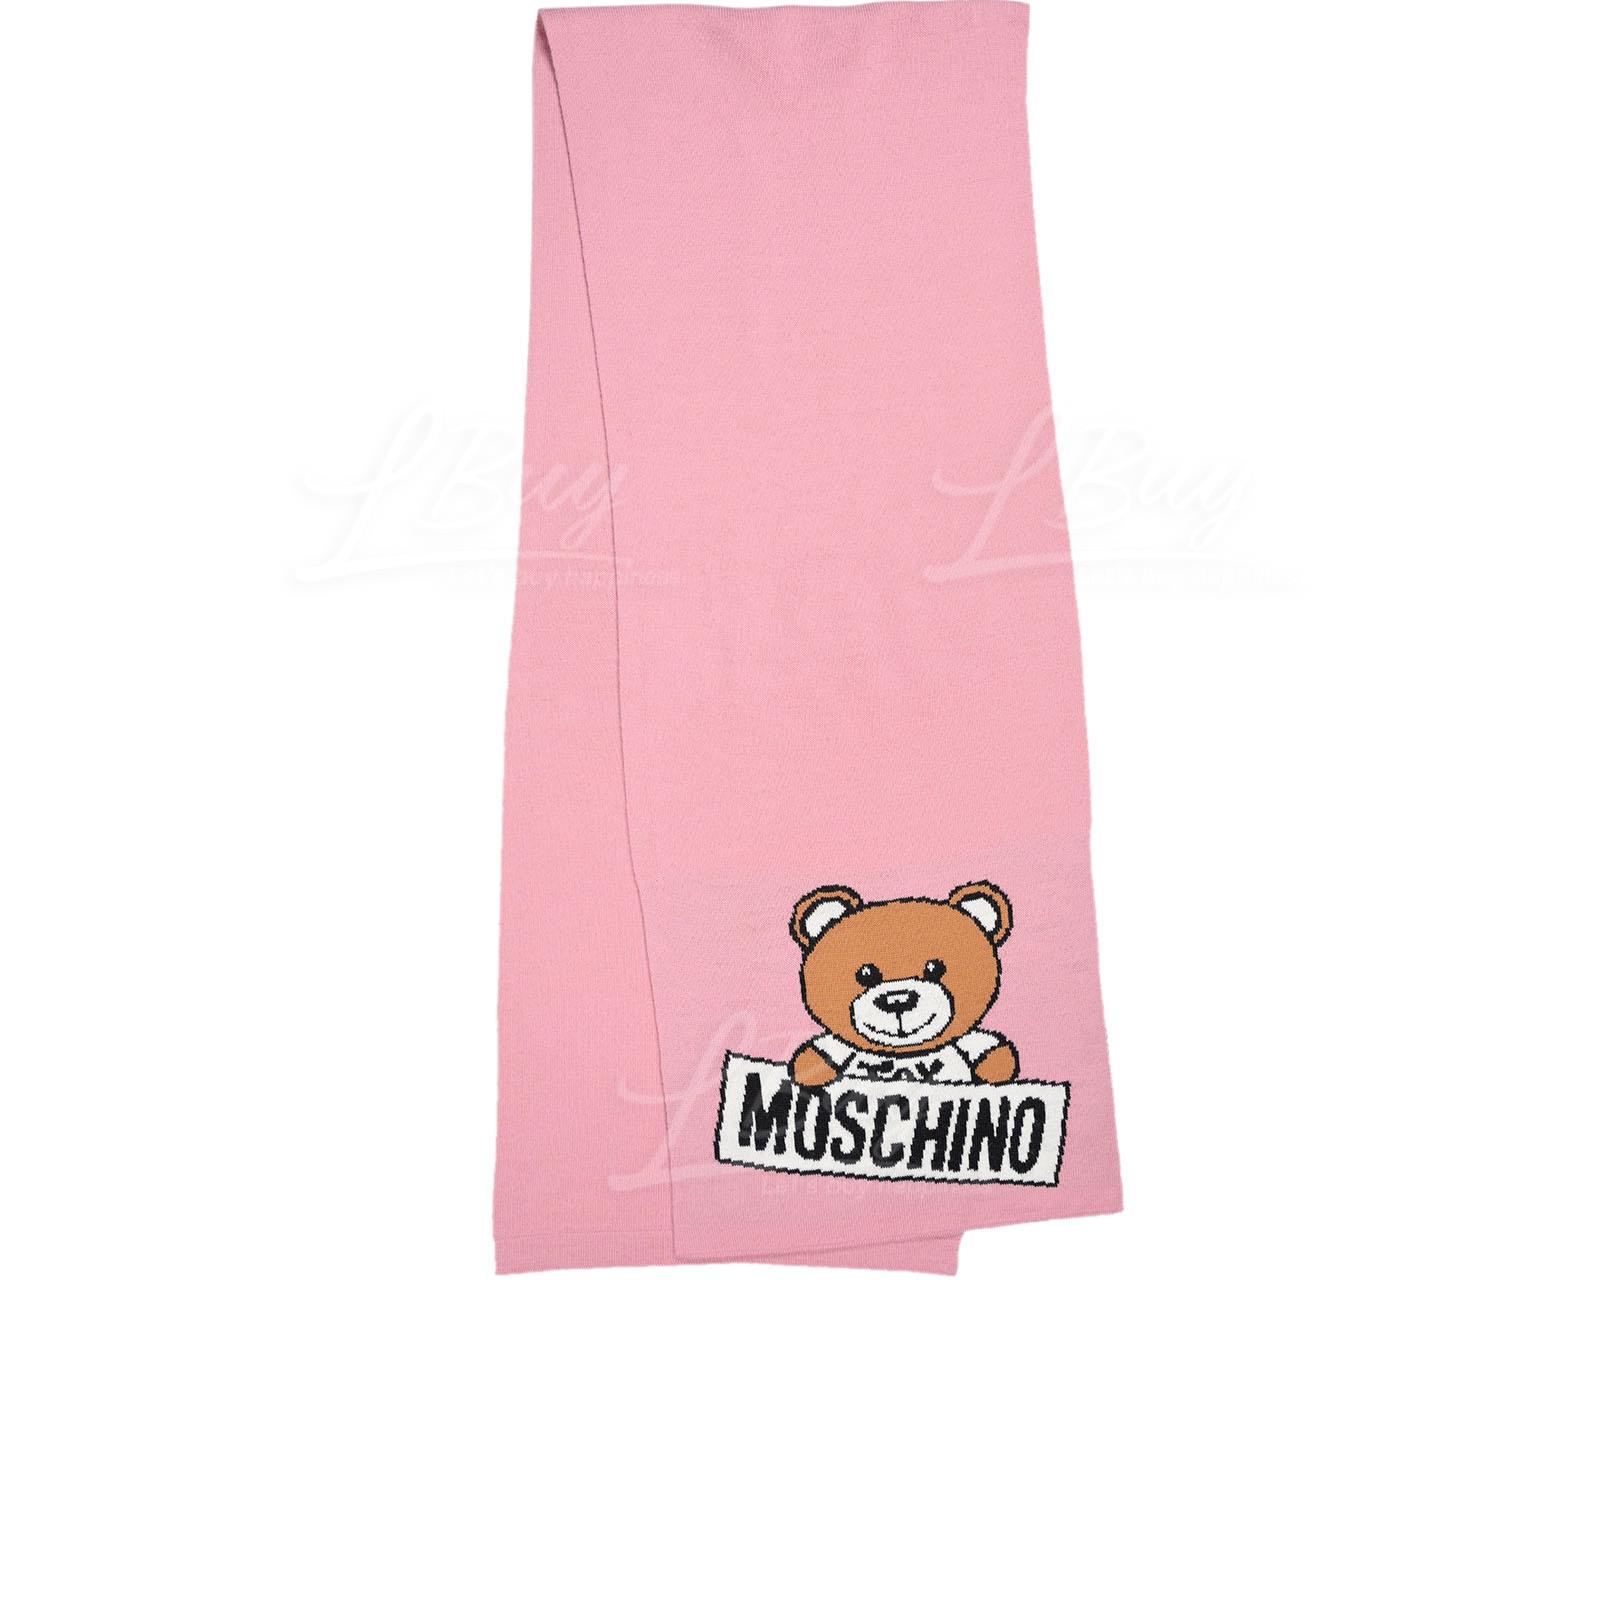 Moschino 泰迪熊大Logo粉紅色圍巾/頸巾